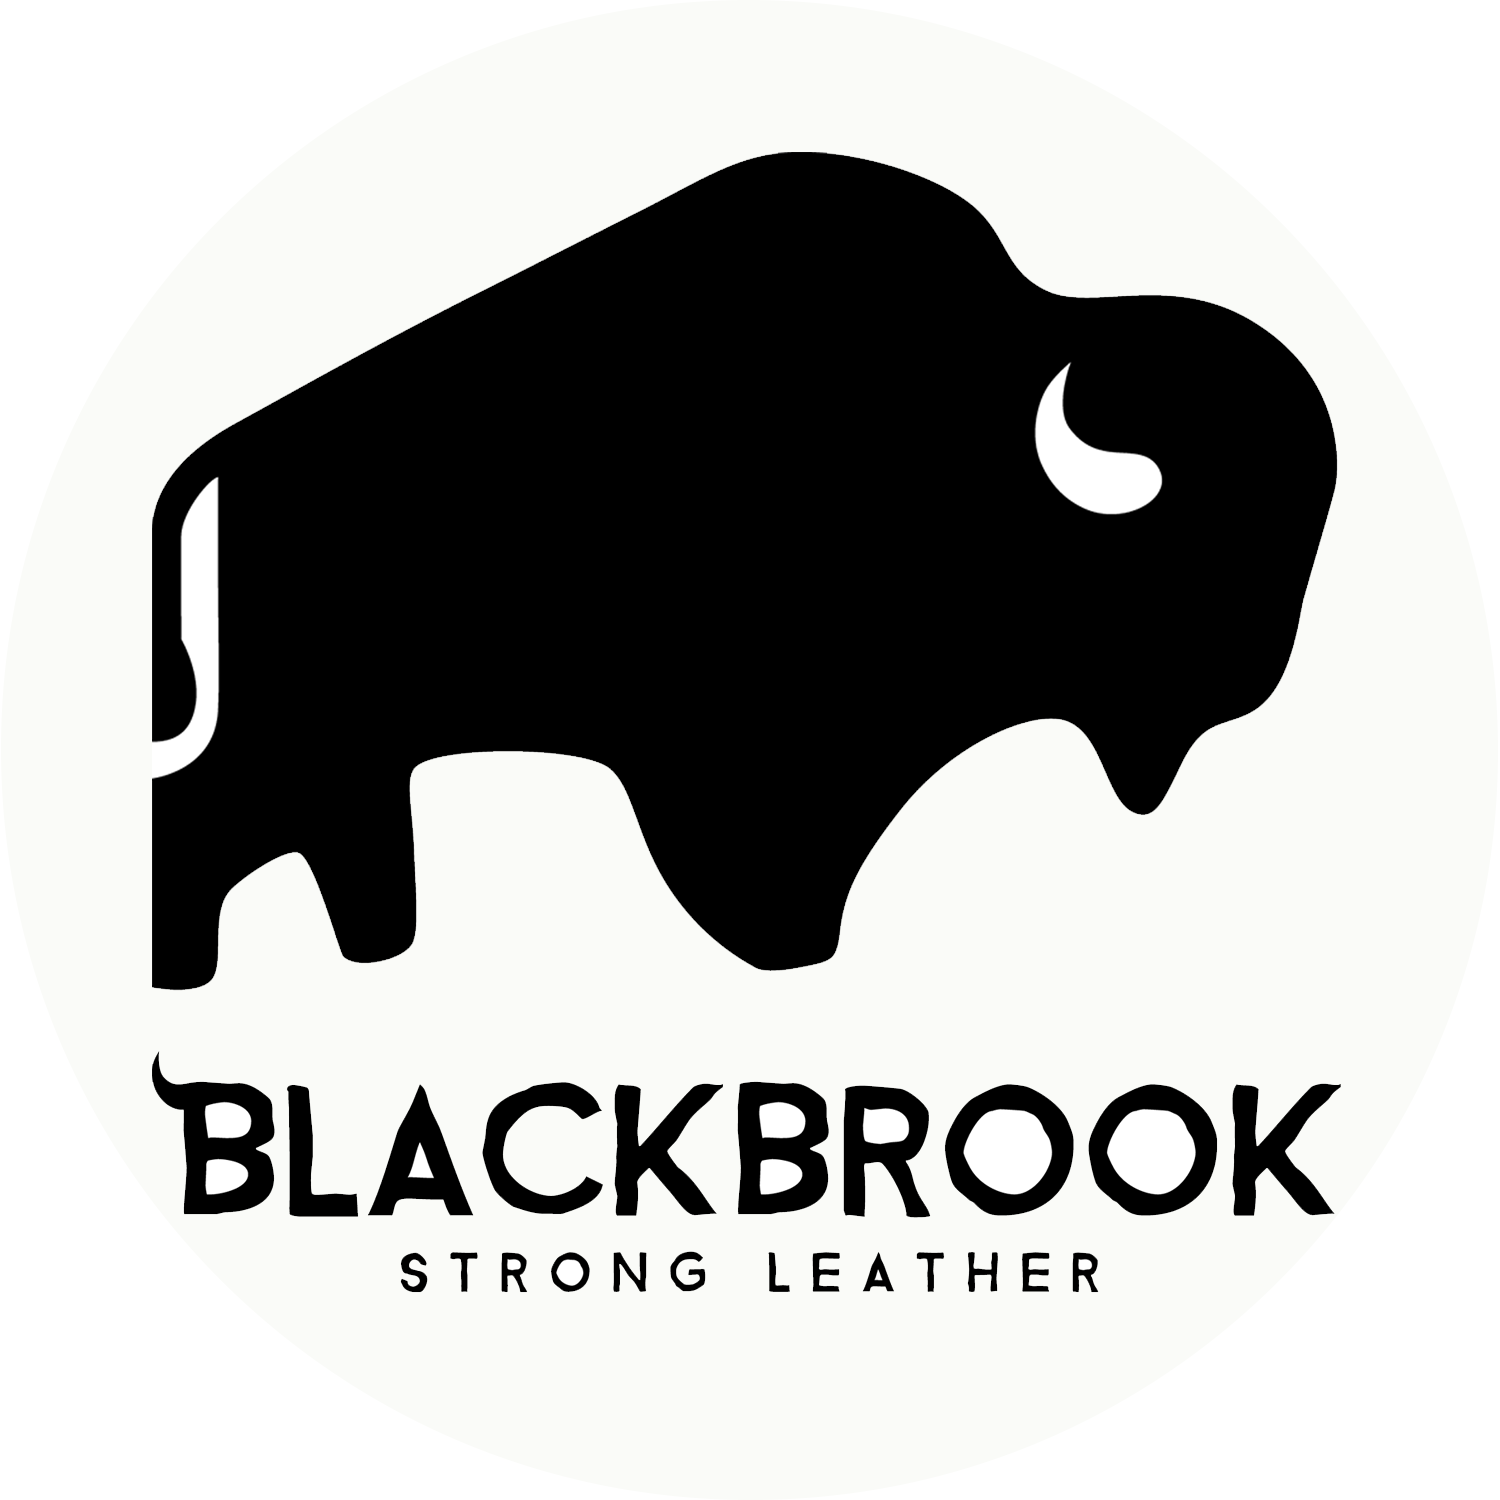 BlackBrook Case